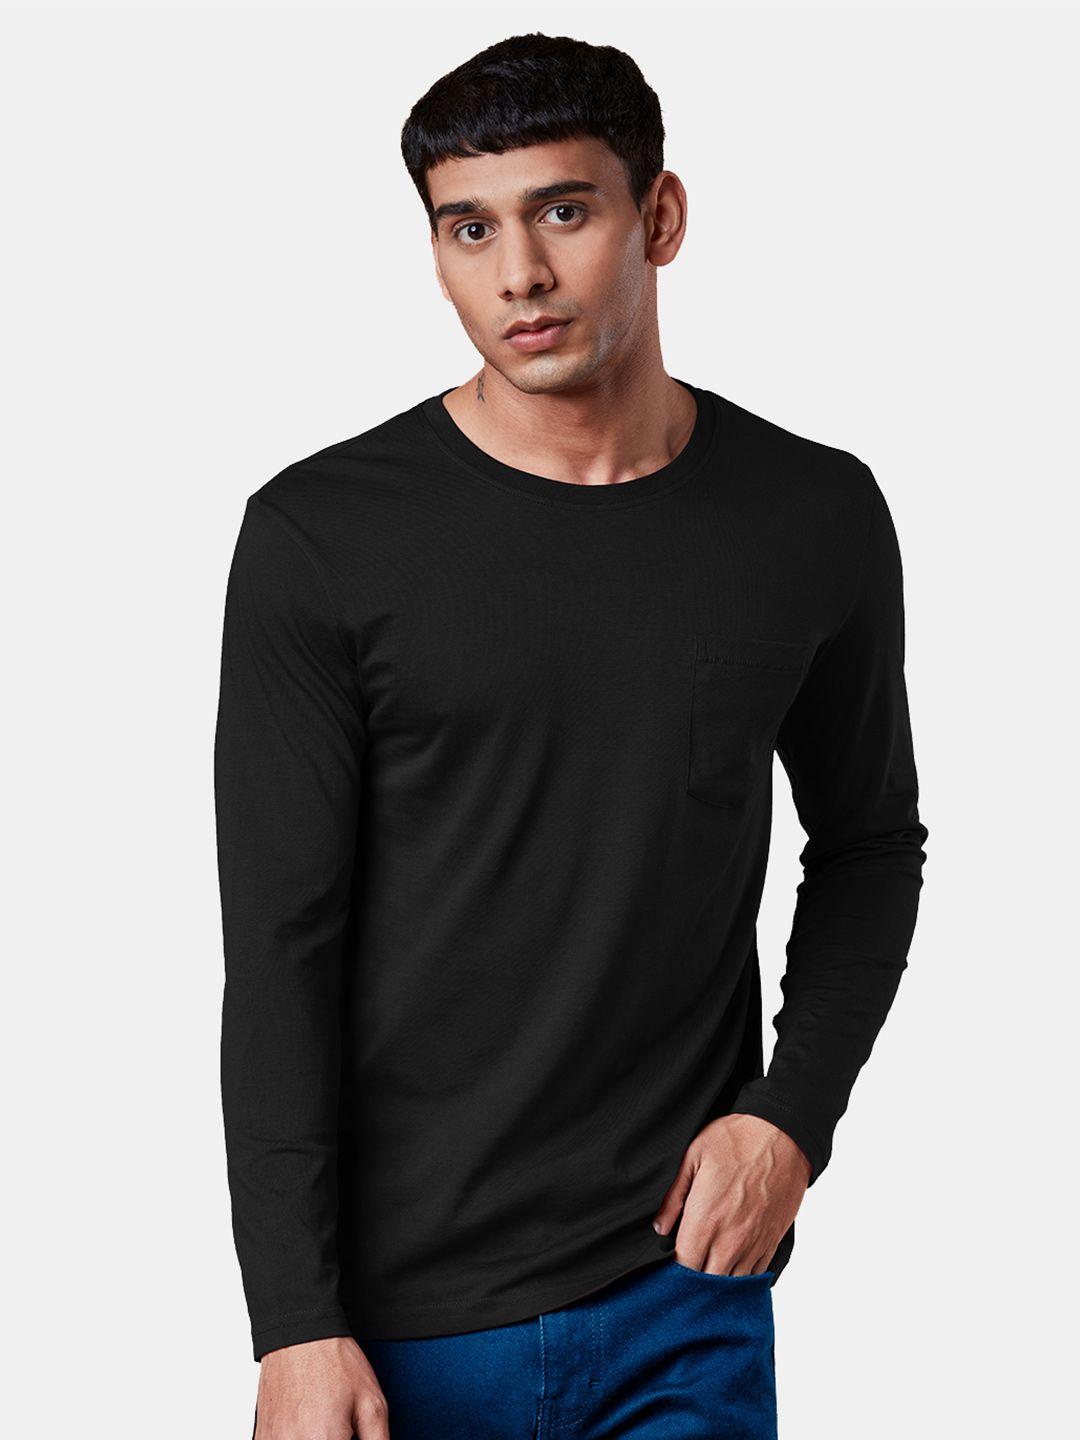 the-souled-store-men-black-solid-cotton-t-shirt